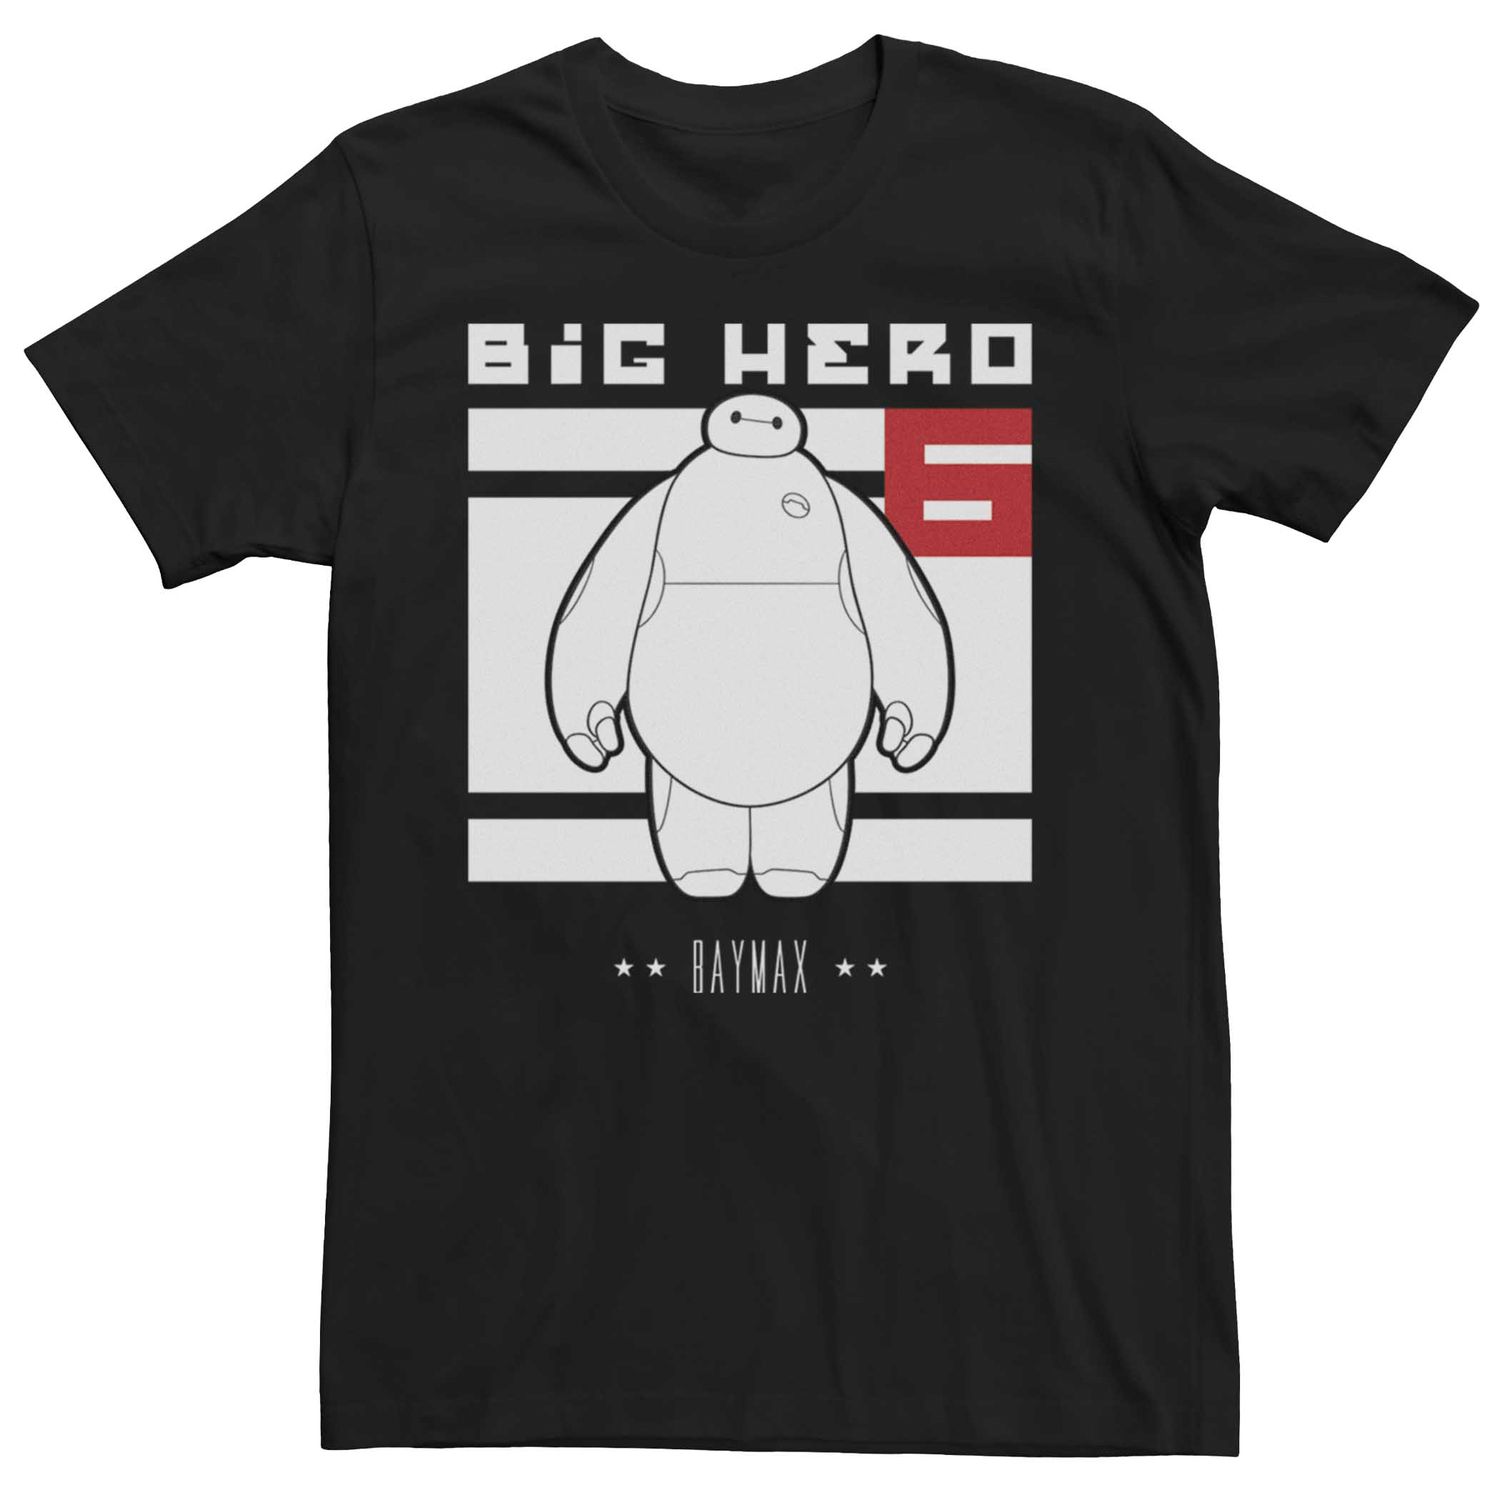 Мужская футболка с графическим плакатом Disney Big Hero 6 Baymax Licensed Character